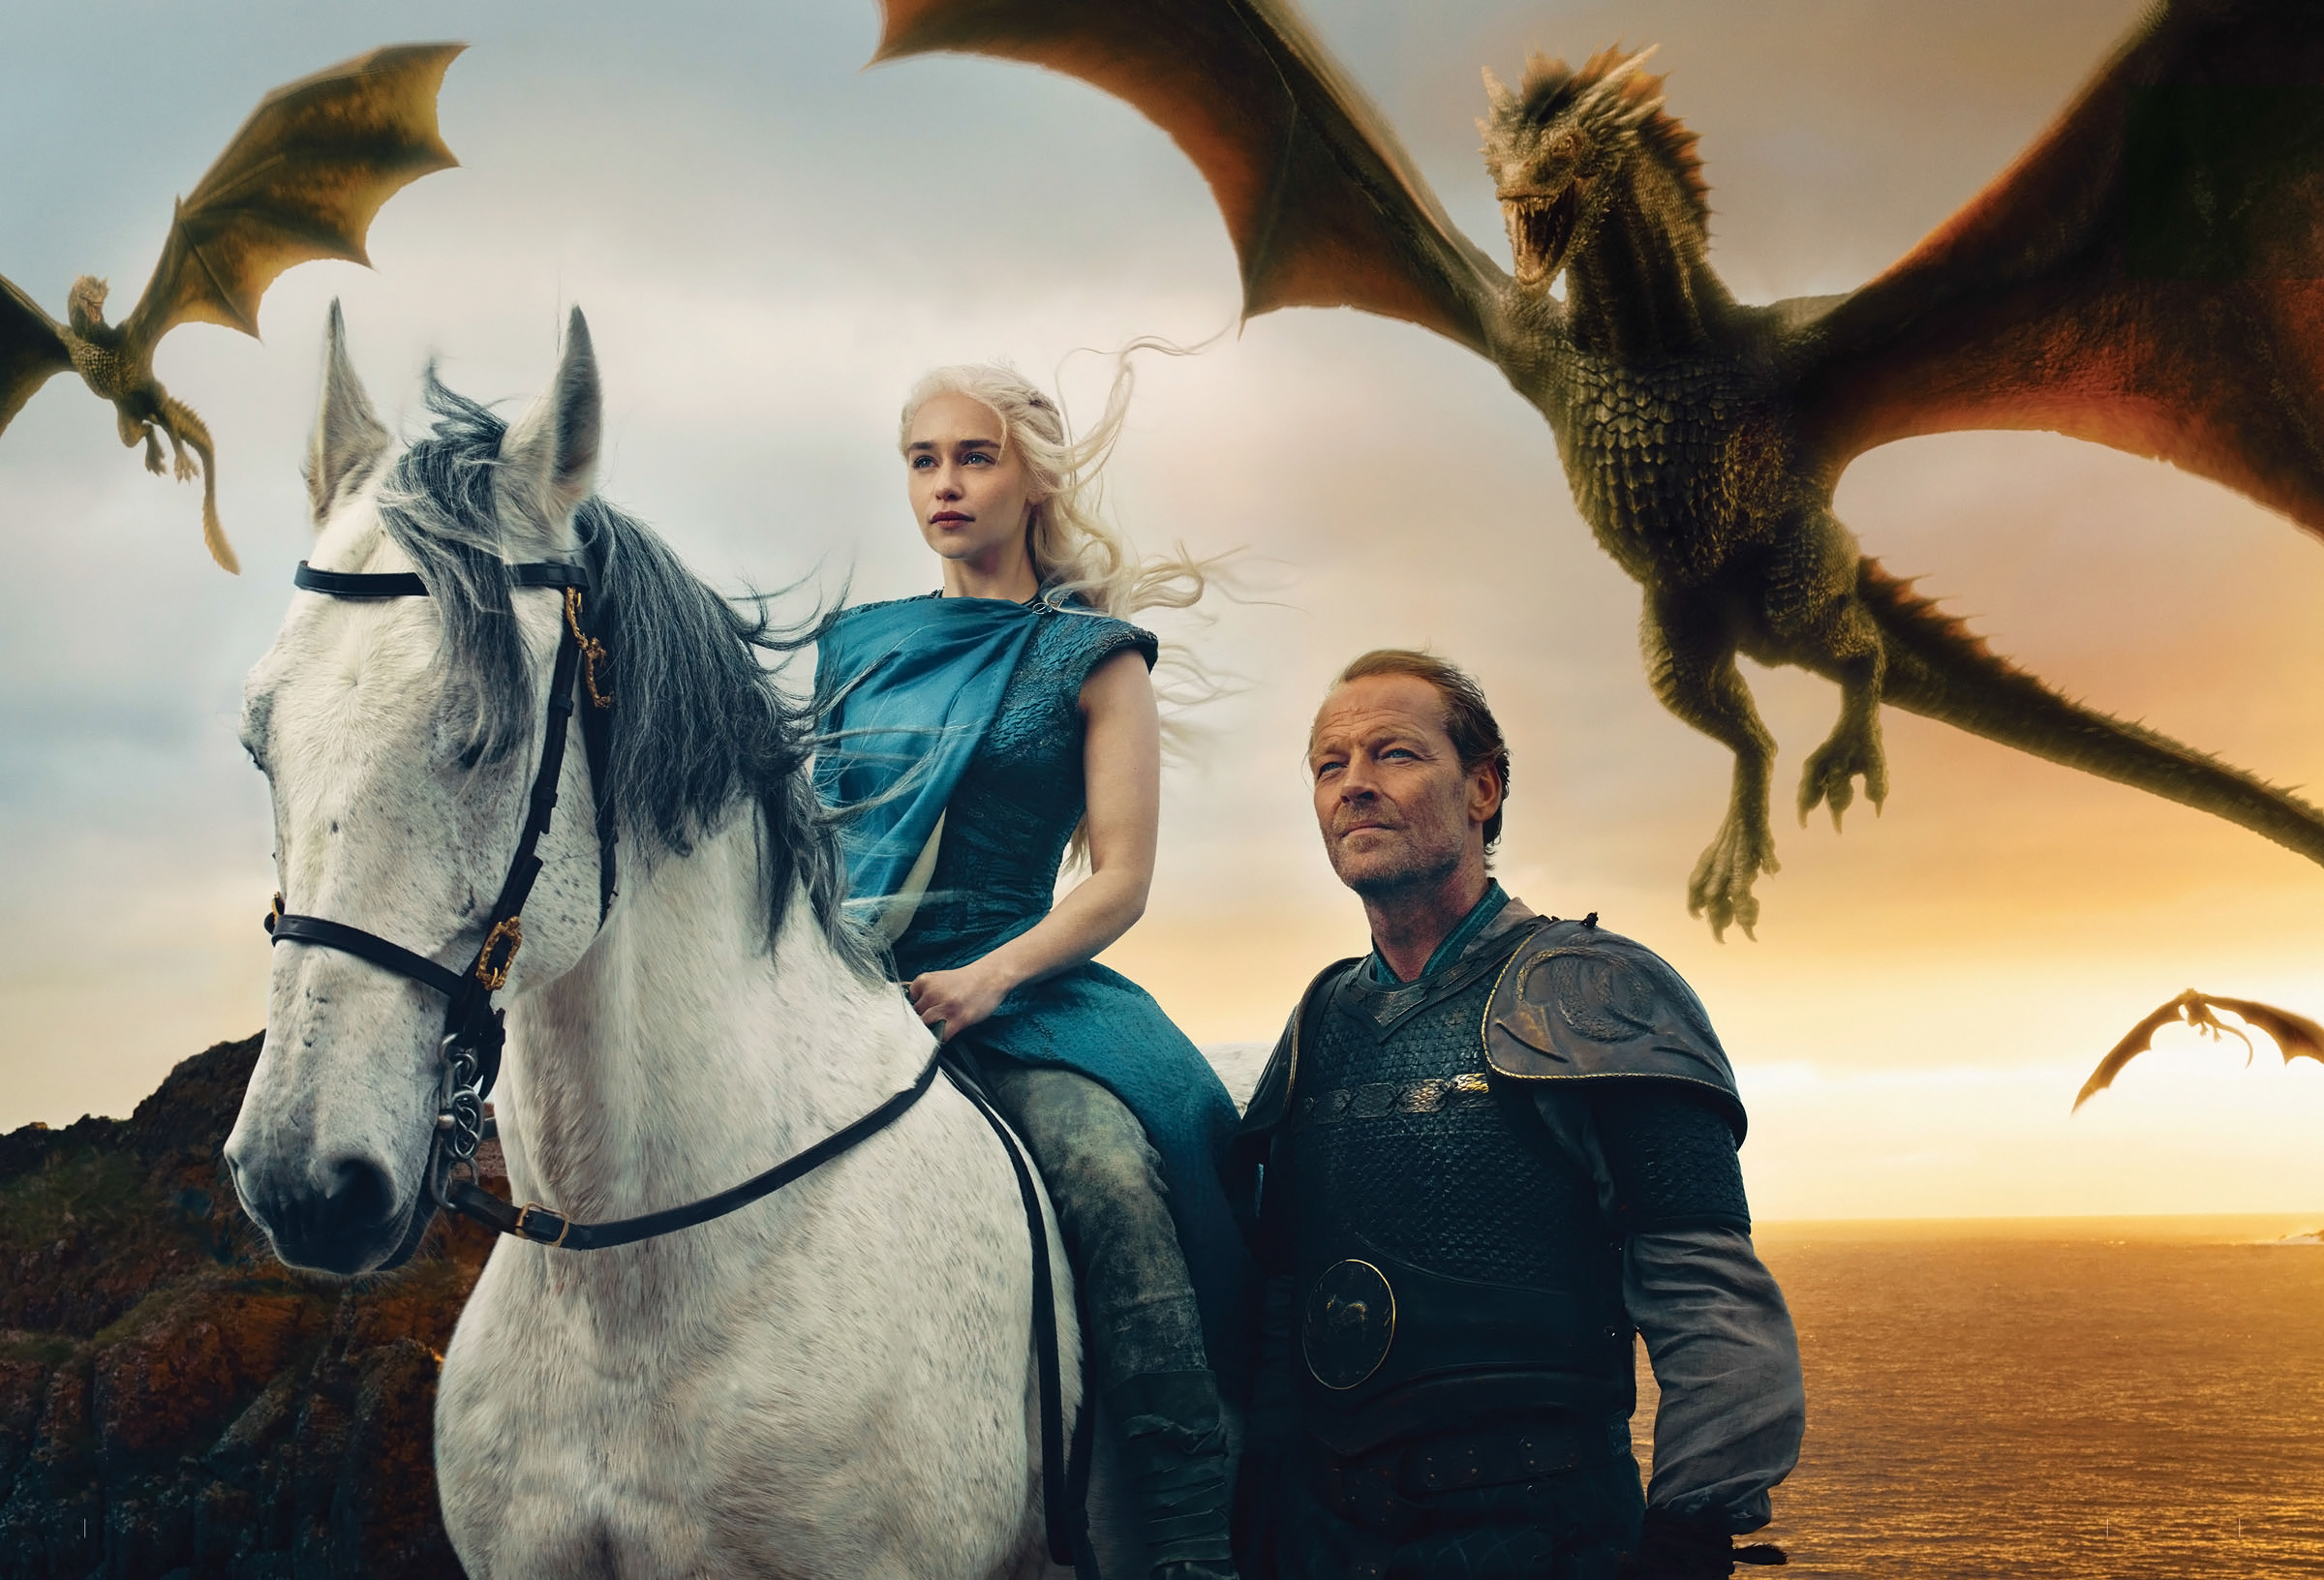 Game of thrones Daenerys targaryen Emilia clarke Jorah mormont Iain glen Dragons